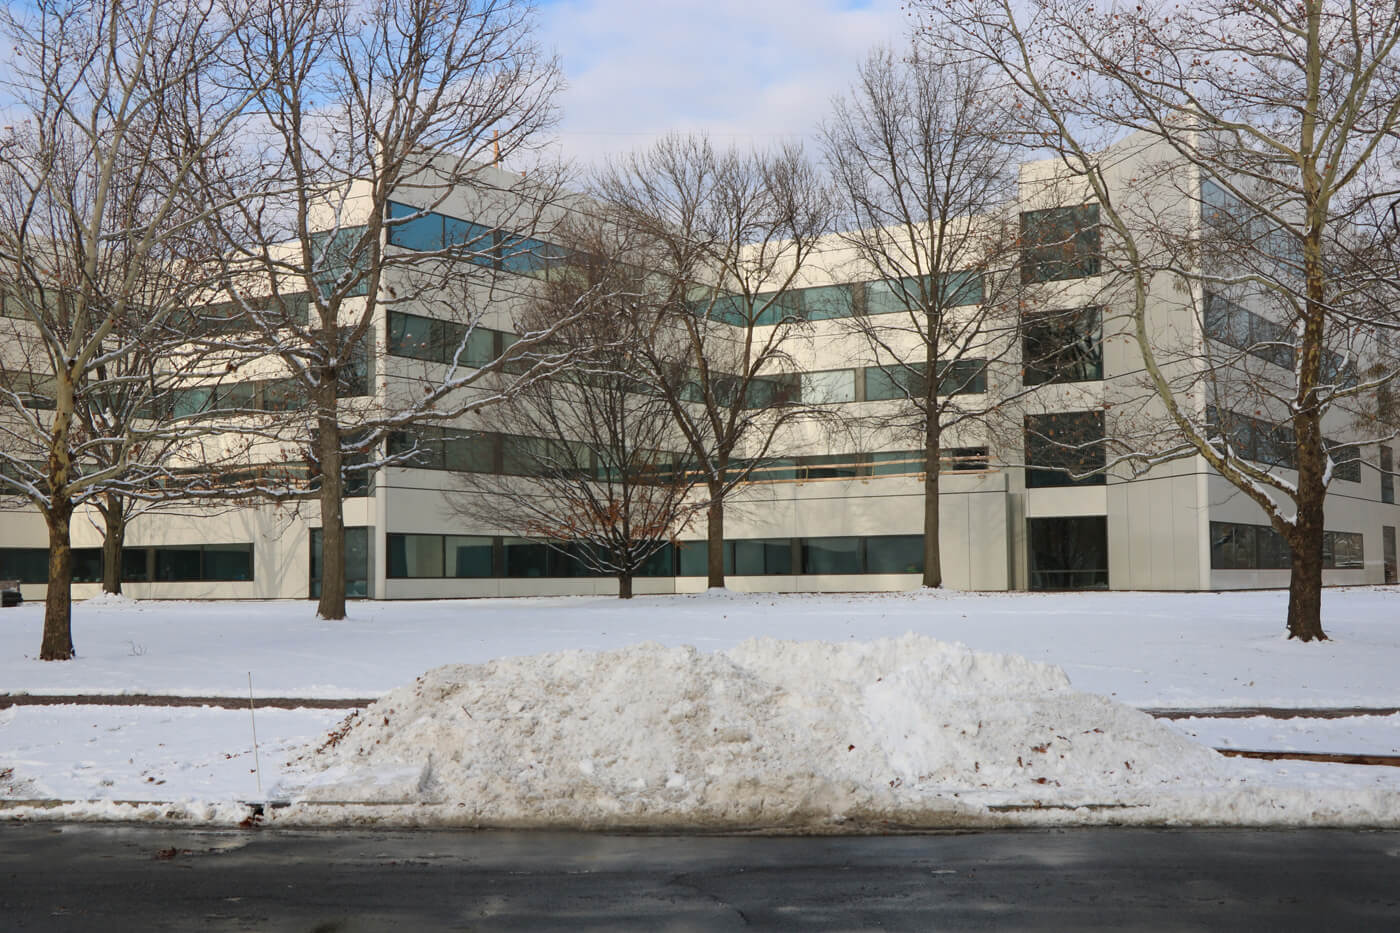 Johnson & Johnson Headquarters, New Jersey - Urbanscape